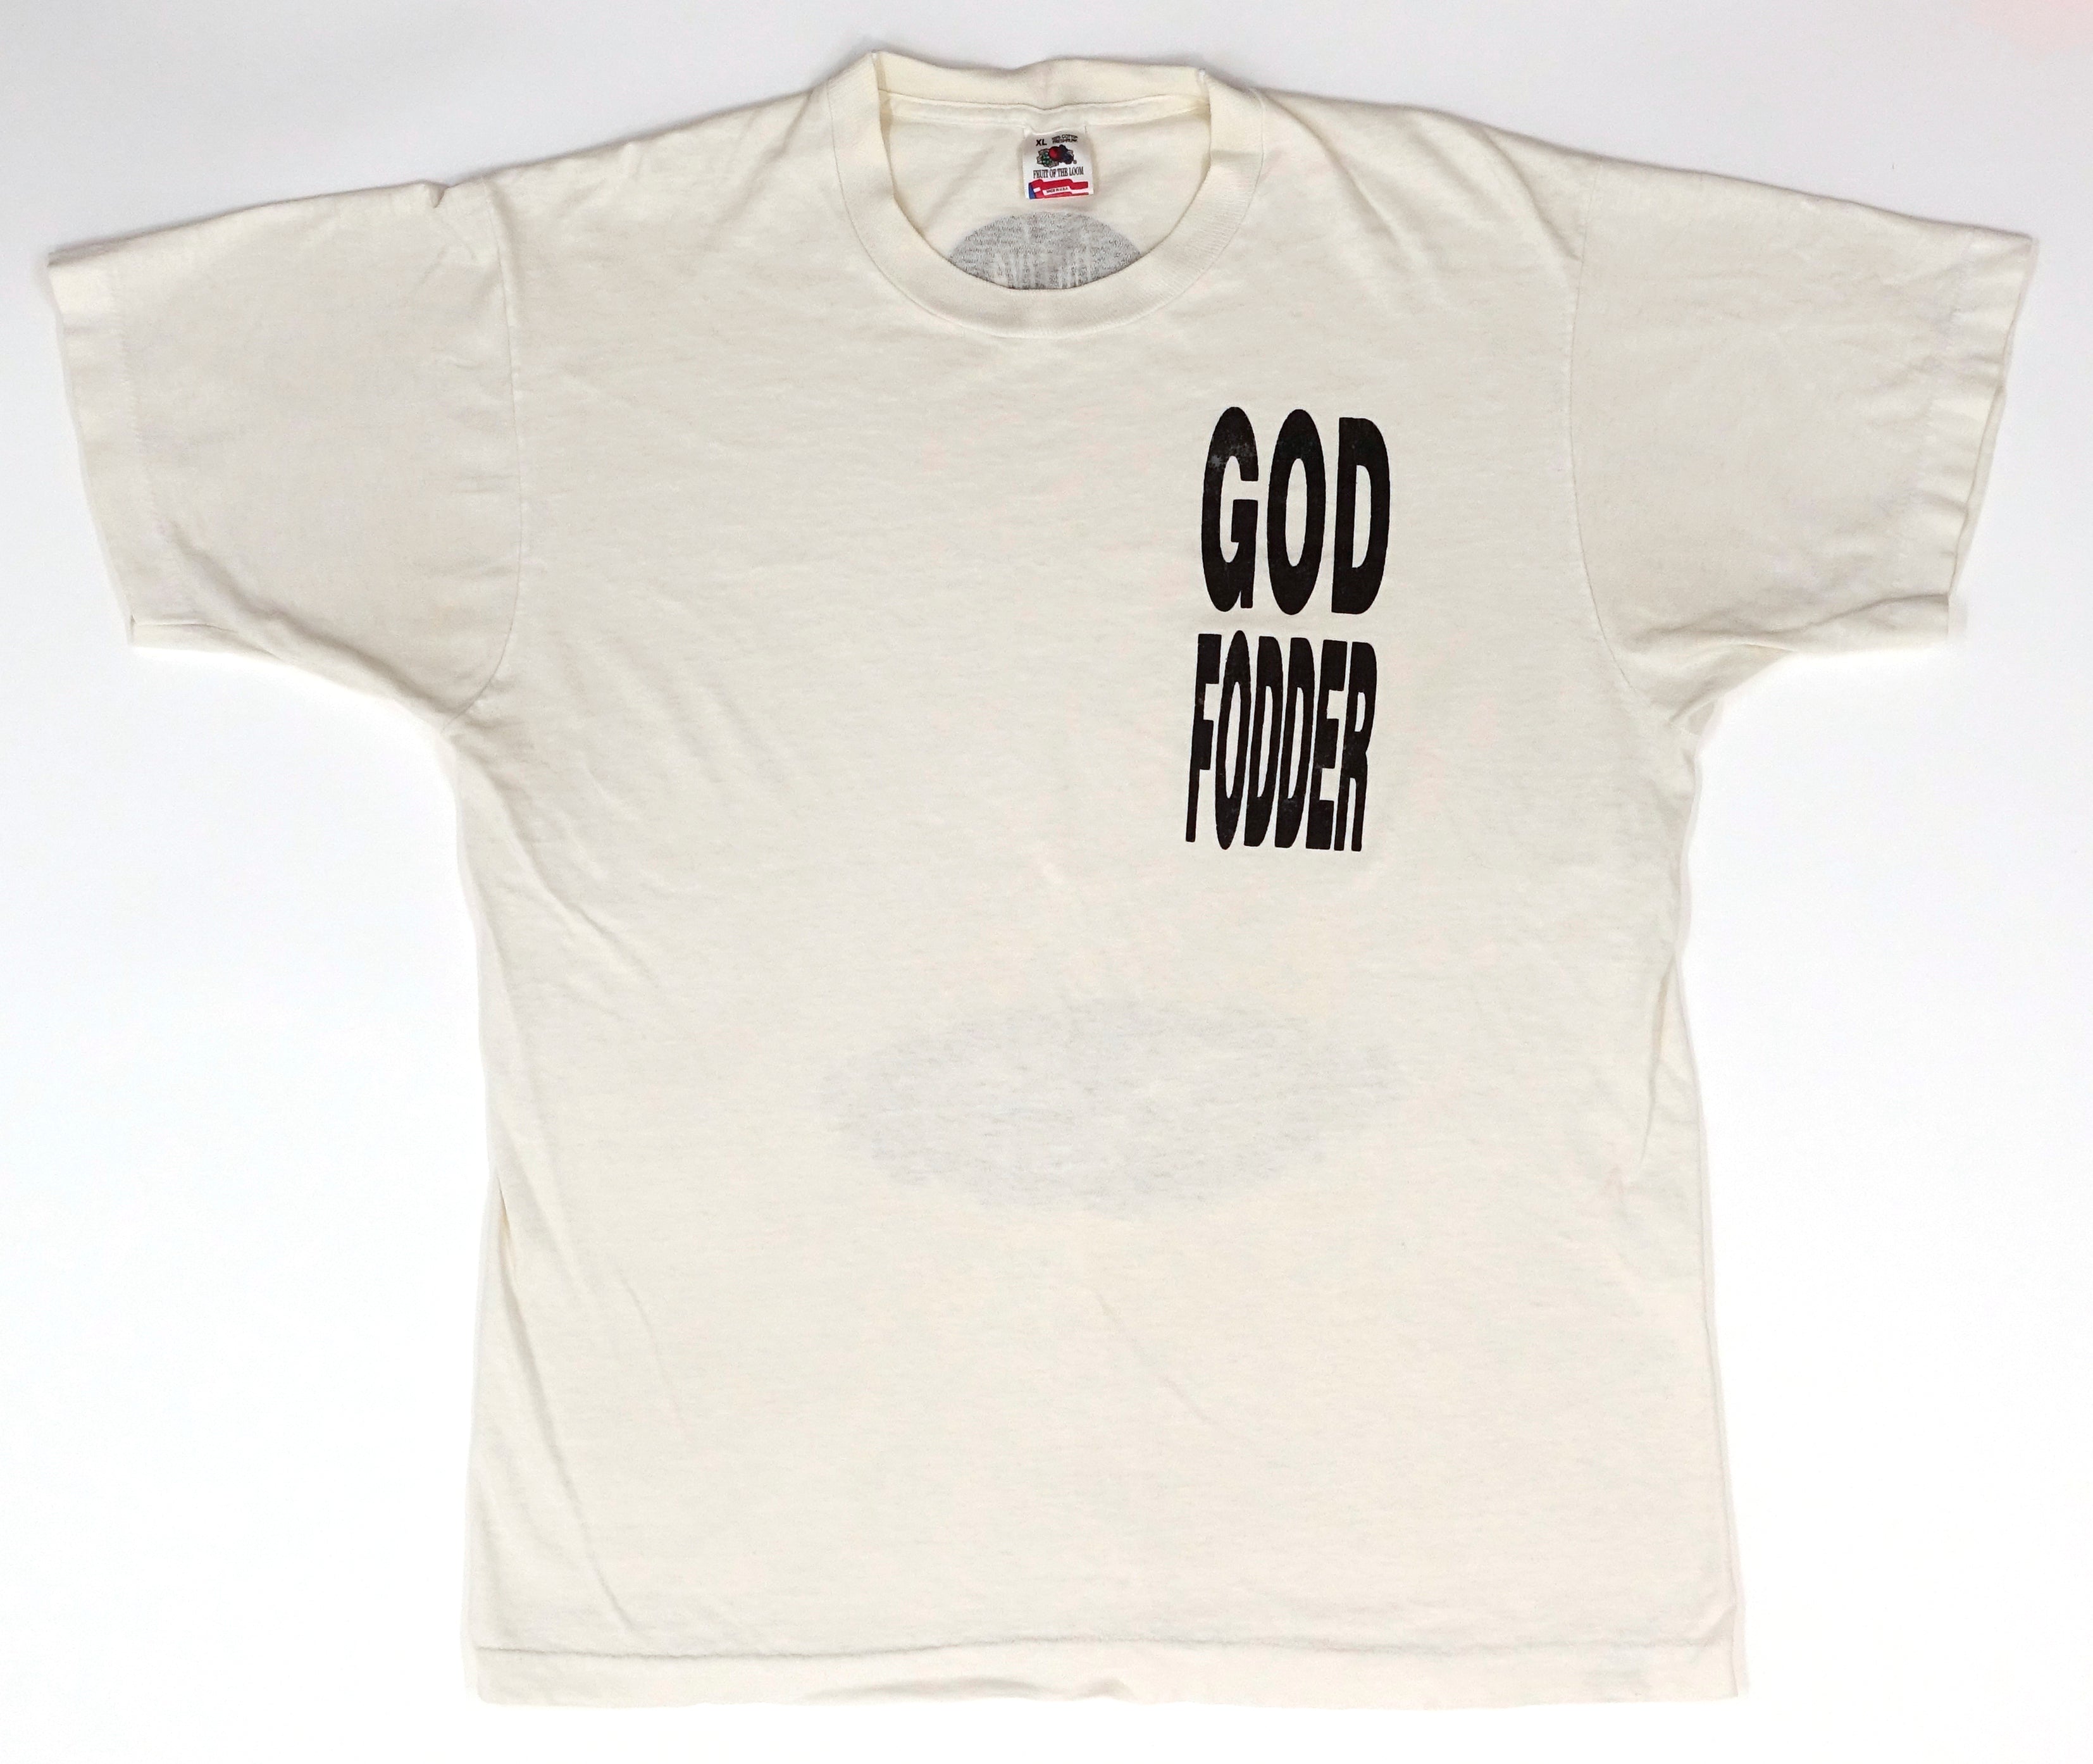 Ned's Atomic Dustbin - God Fodder Pocket Print 1992 Tour Shirt Size XL